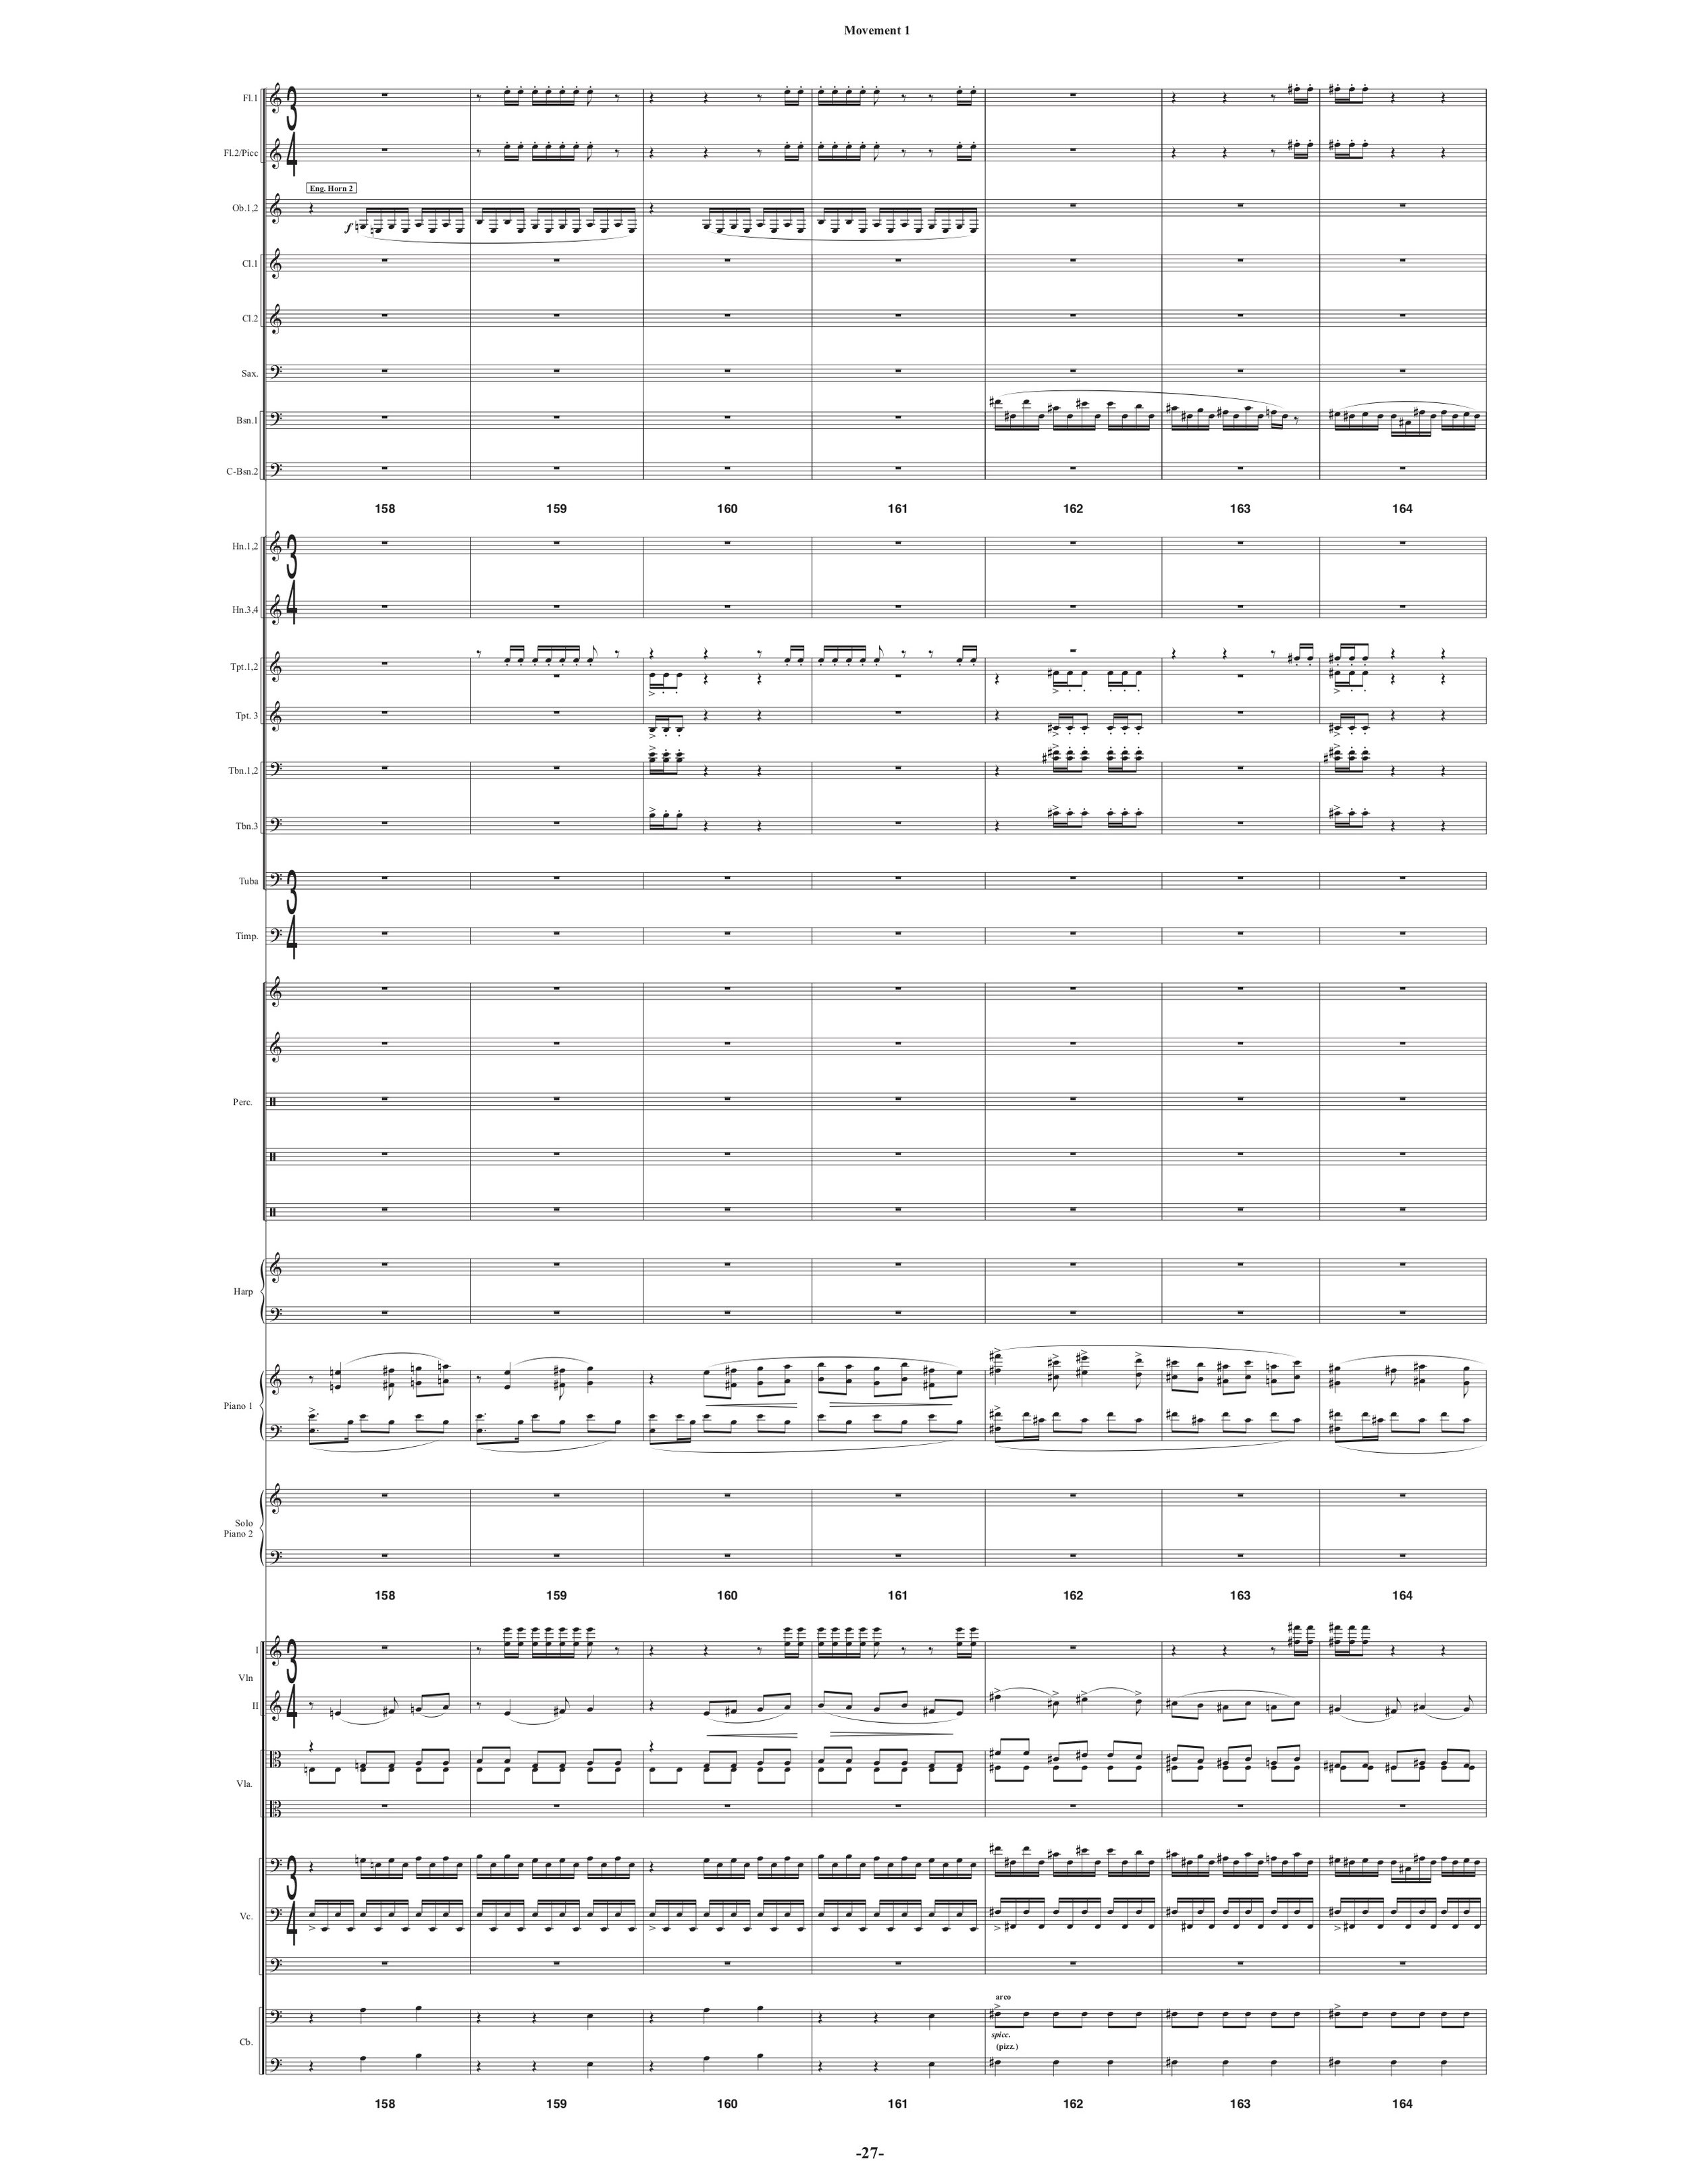 Symphony_Orch & 2 Pianos p32.jpg